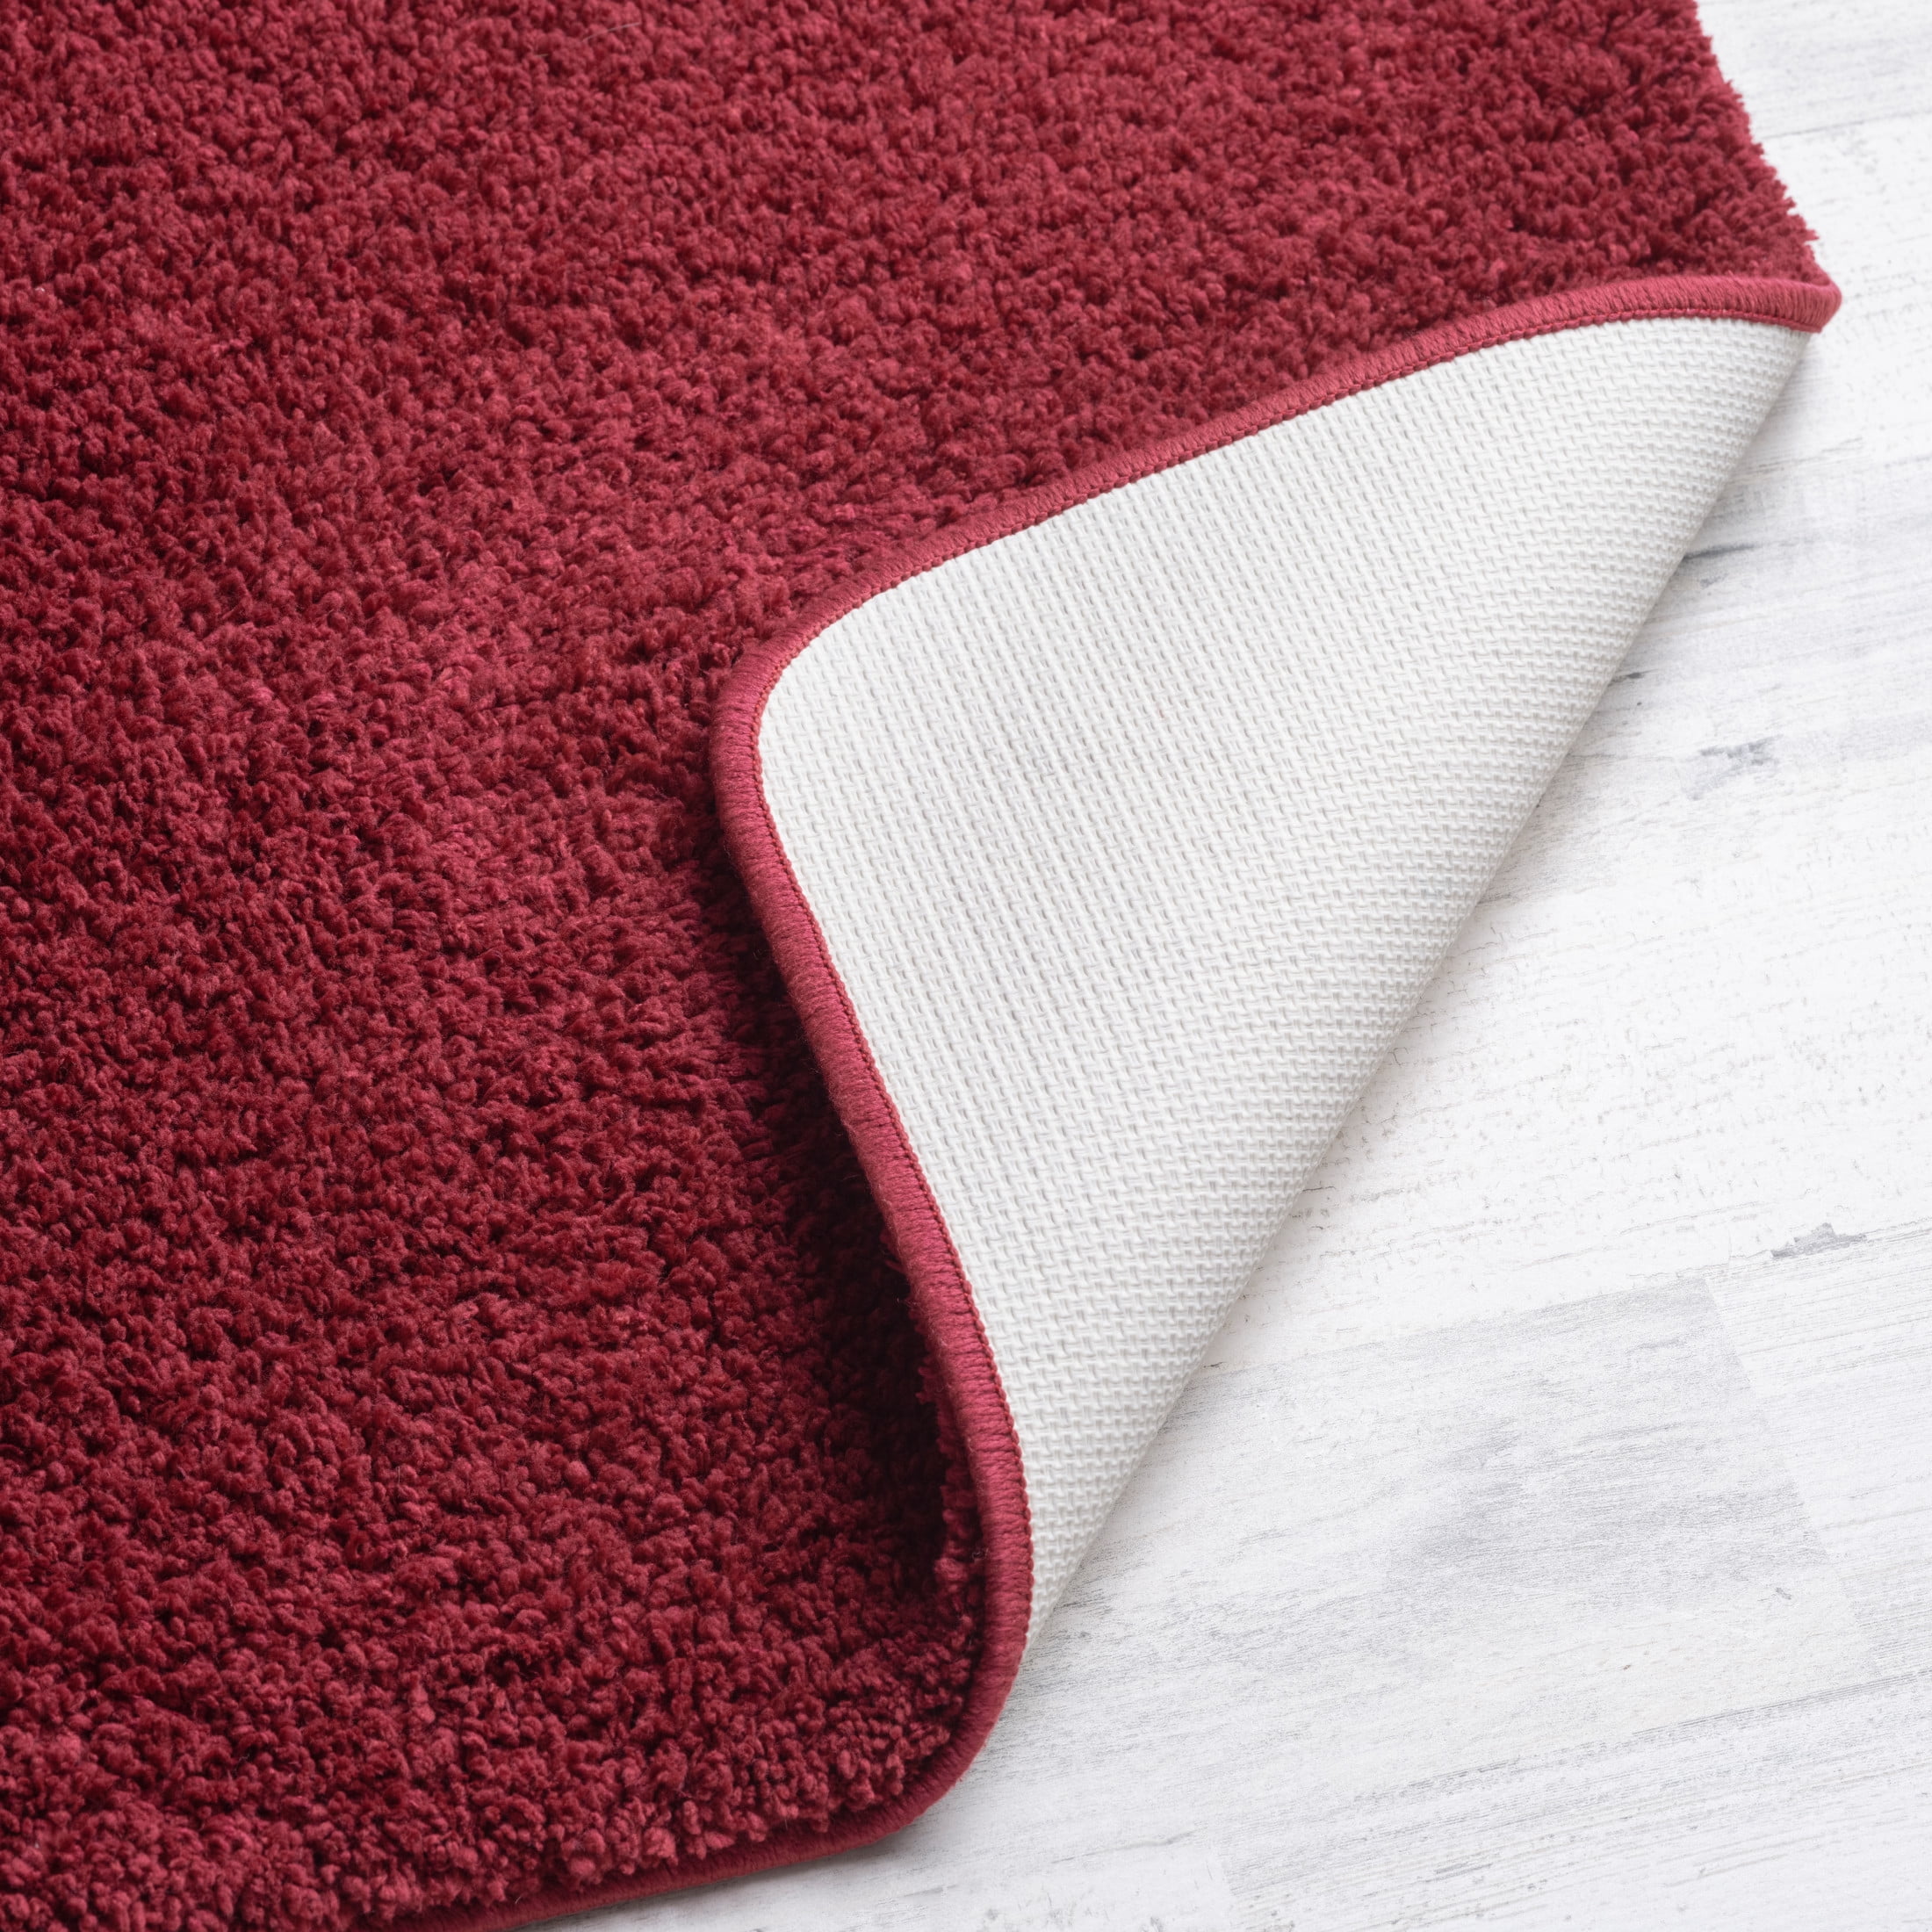 Bath Mat Sets Brown/Black/Red Rectangular Modern Polyester Best